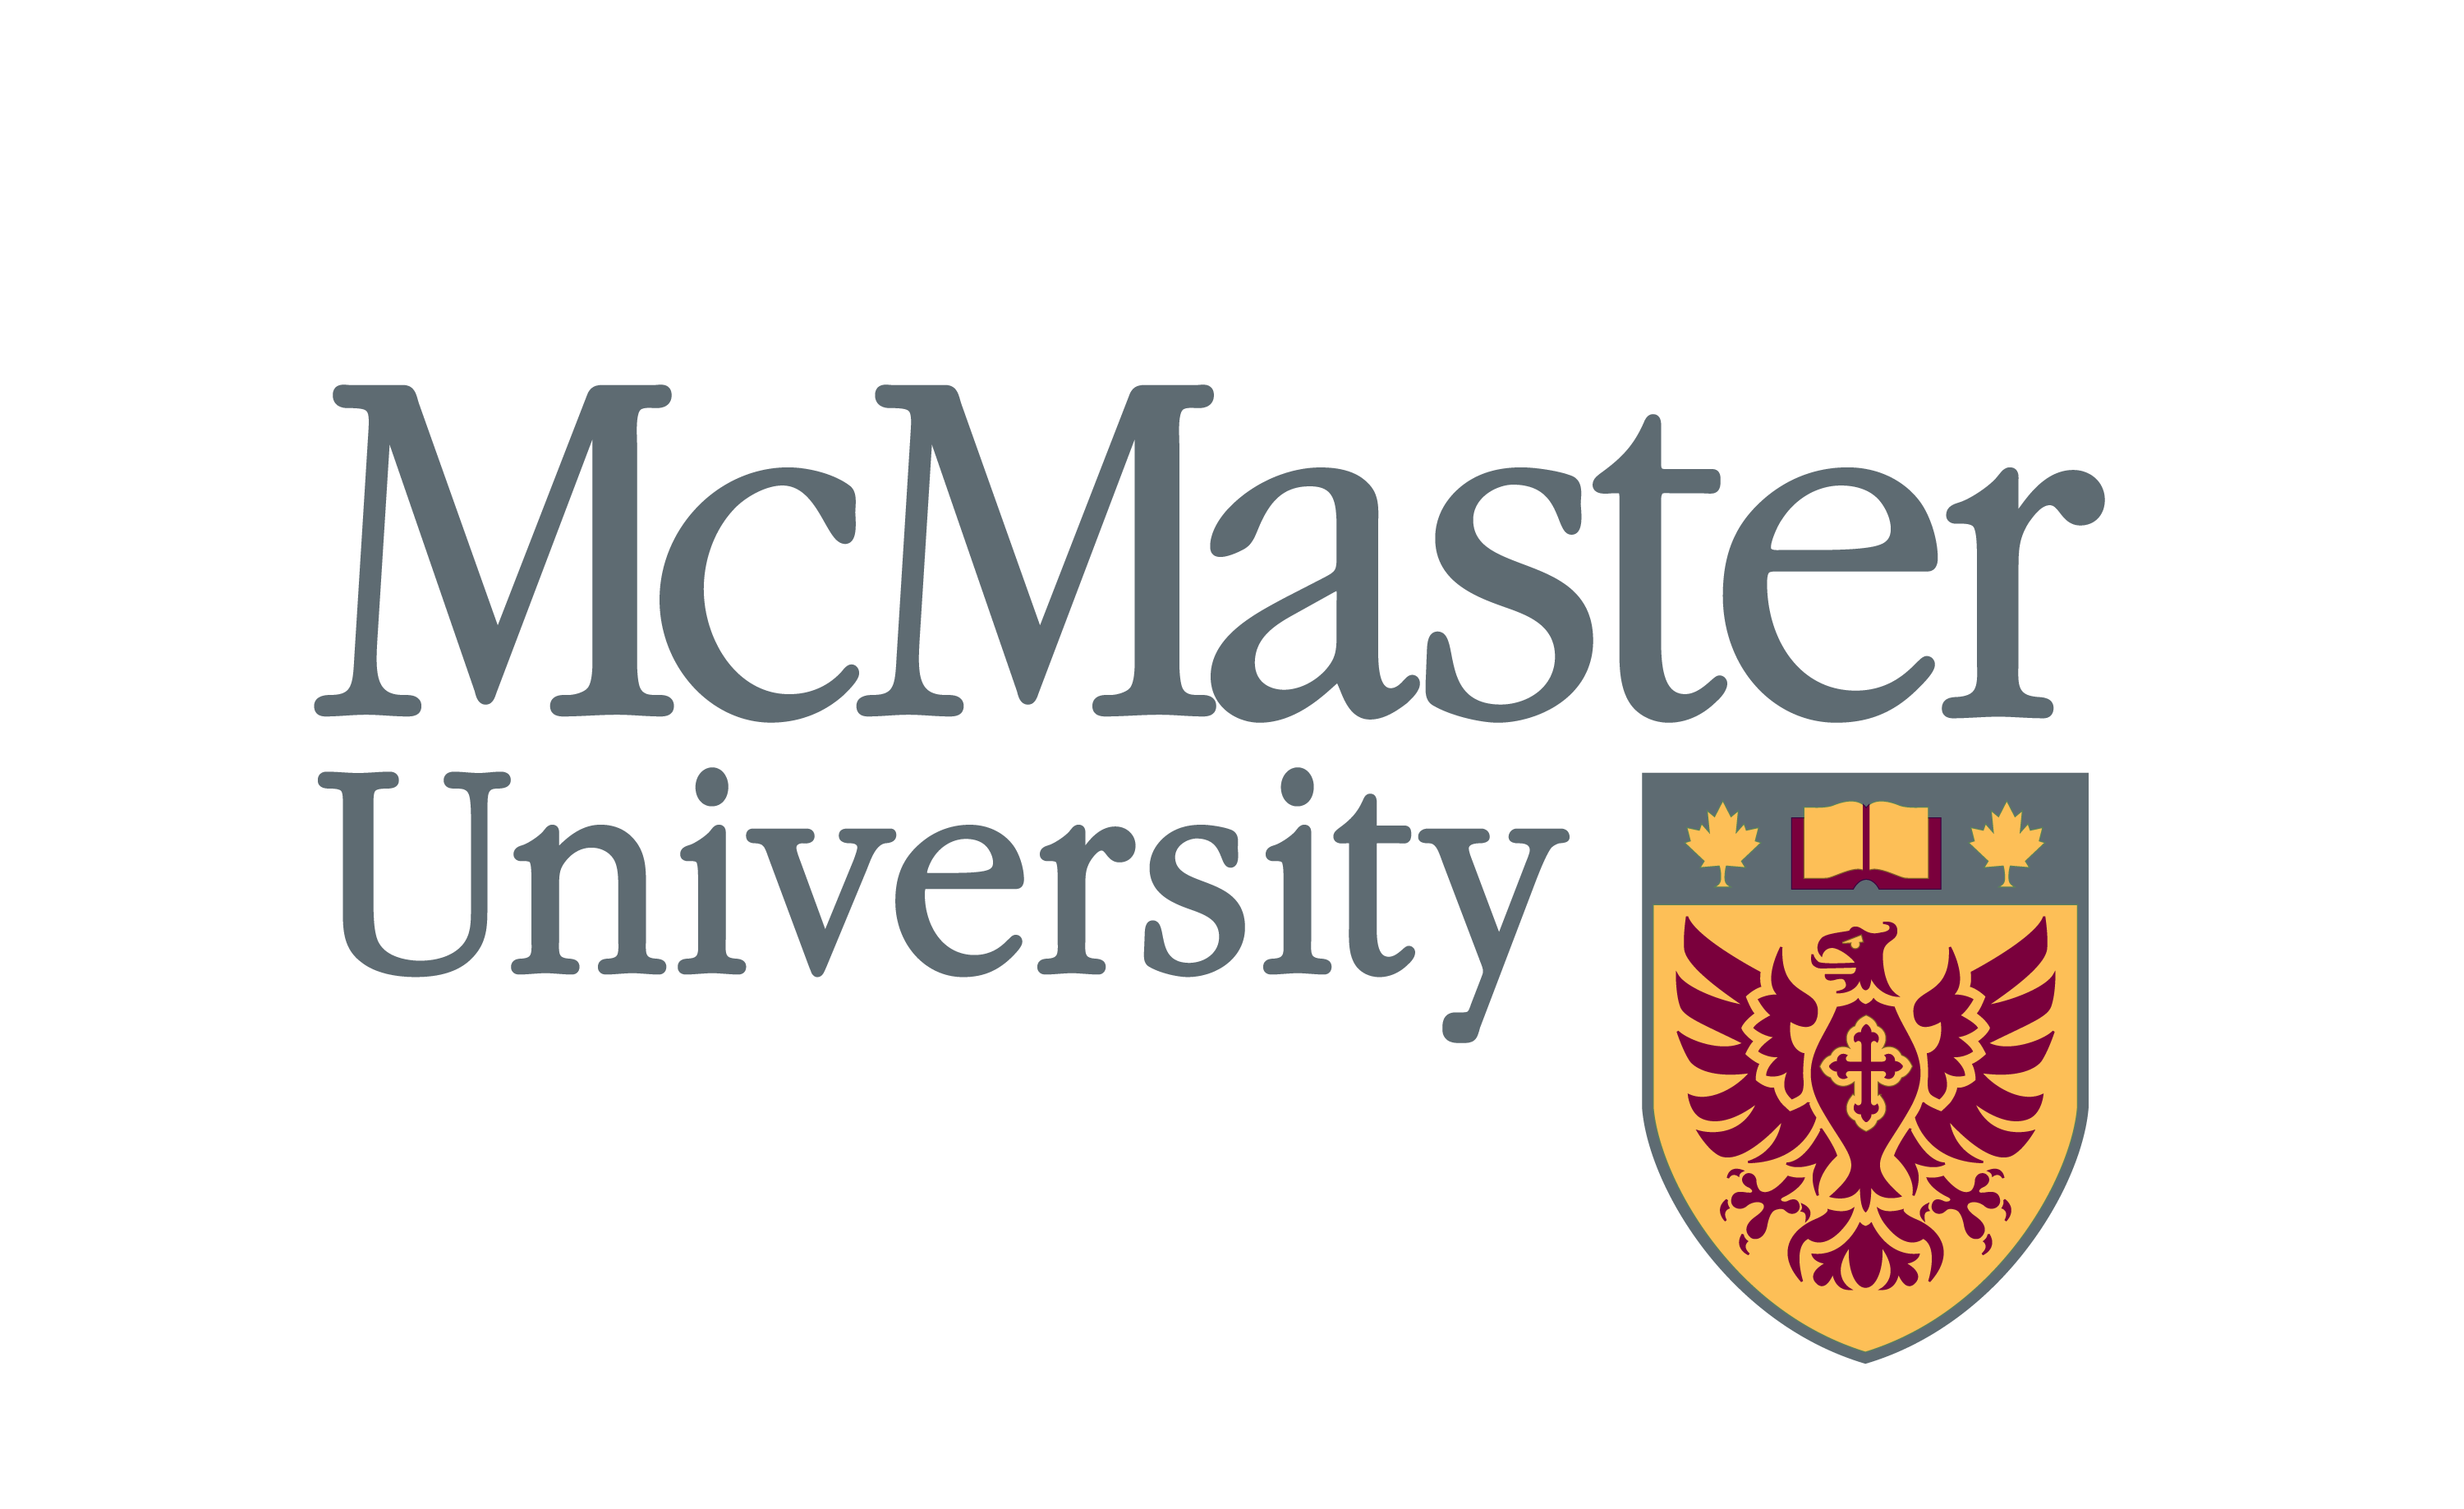 alt= Mcmaster University logo